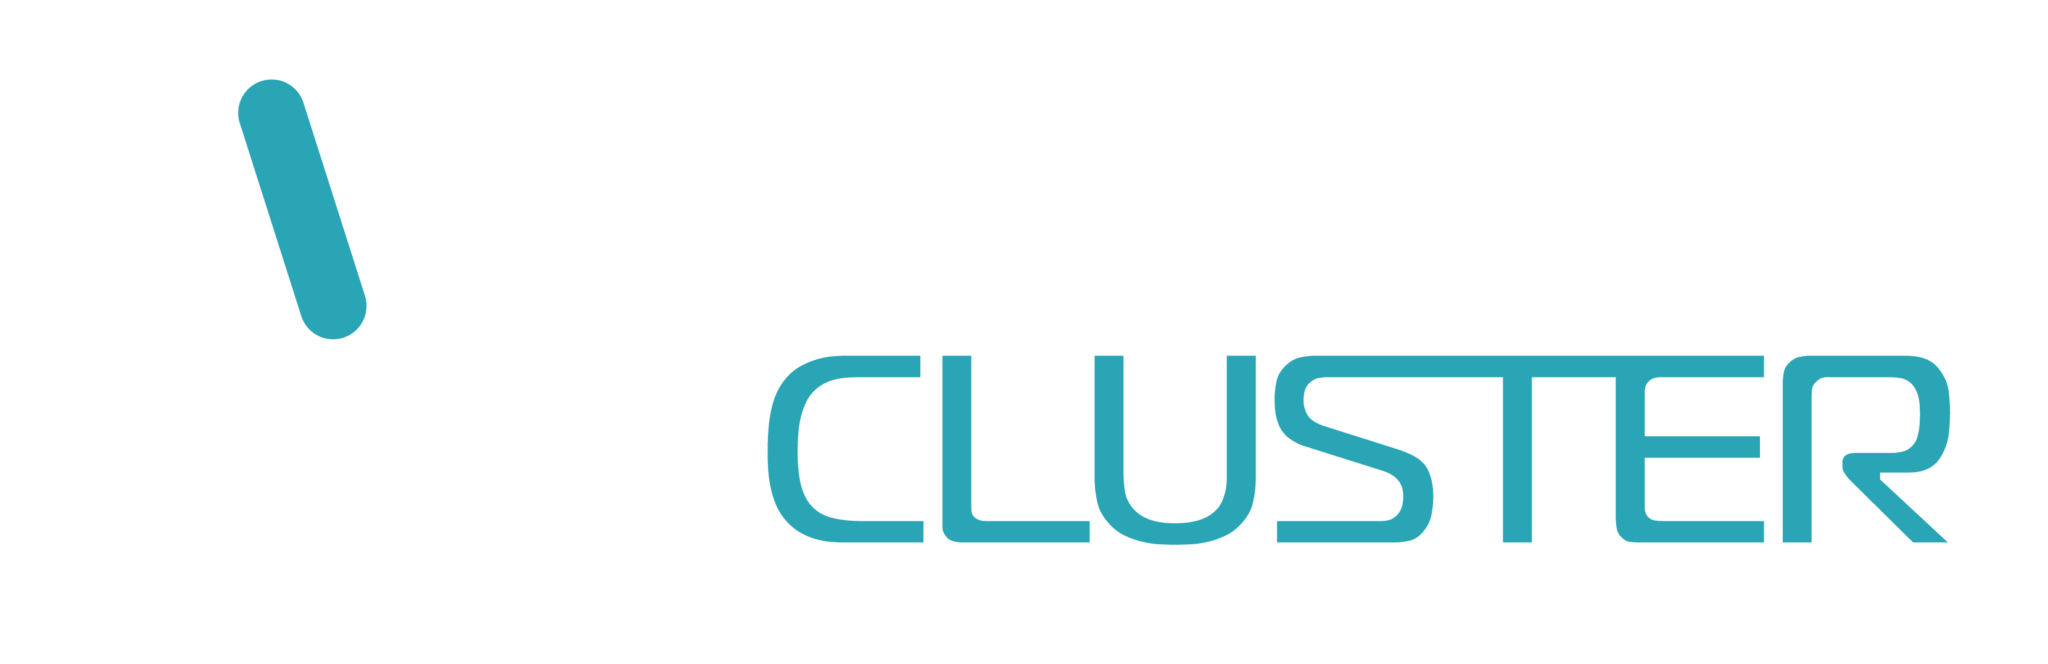 SOLAR-CLUSTER-on-black-01-2048x664